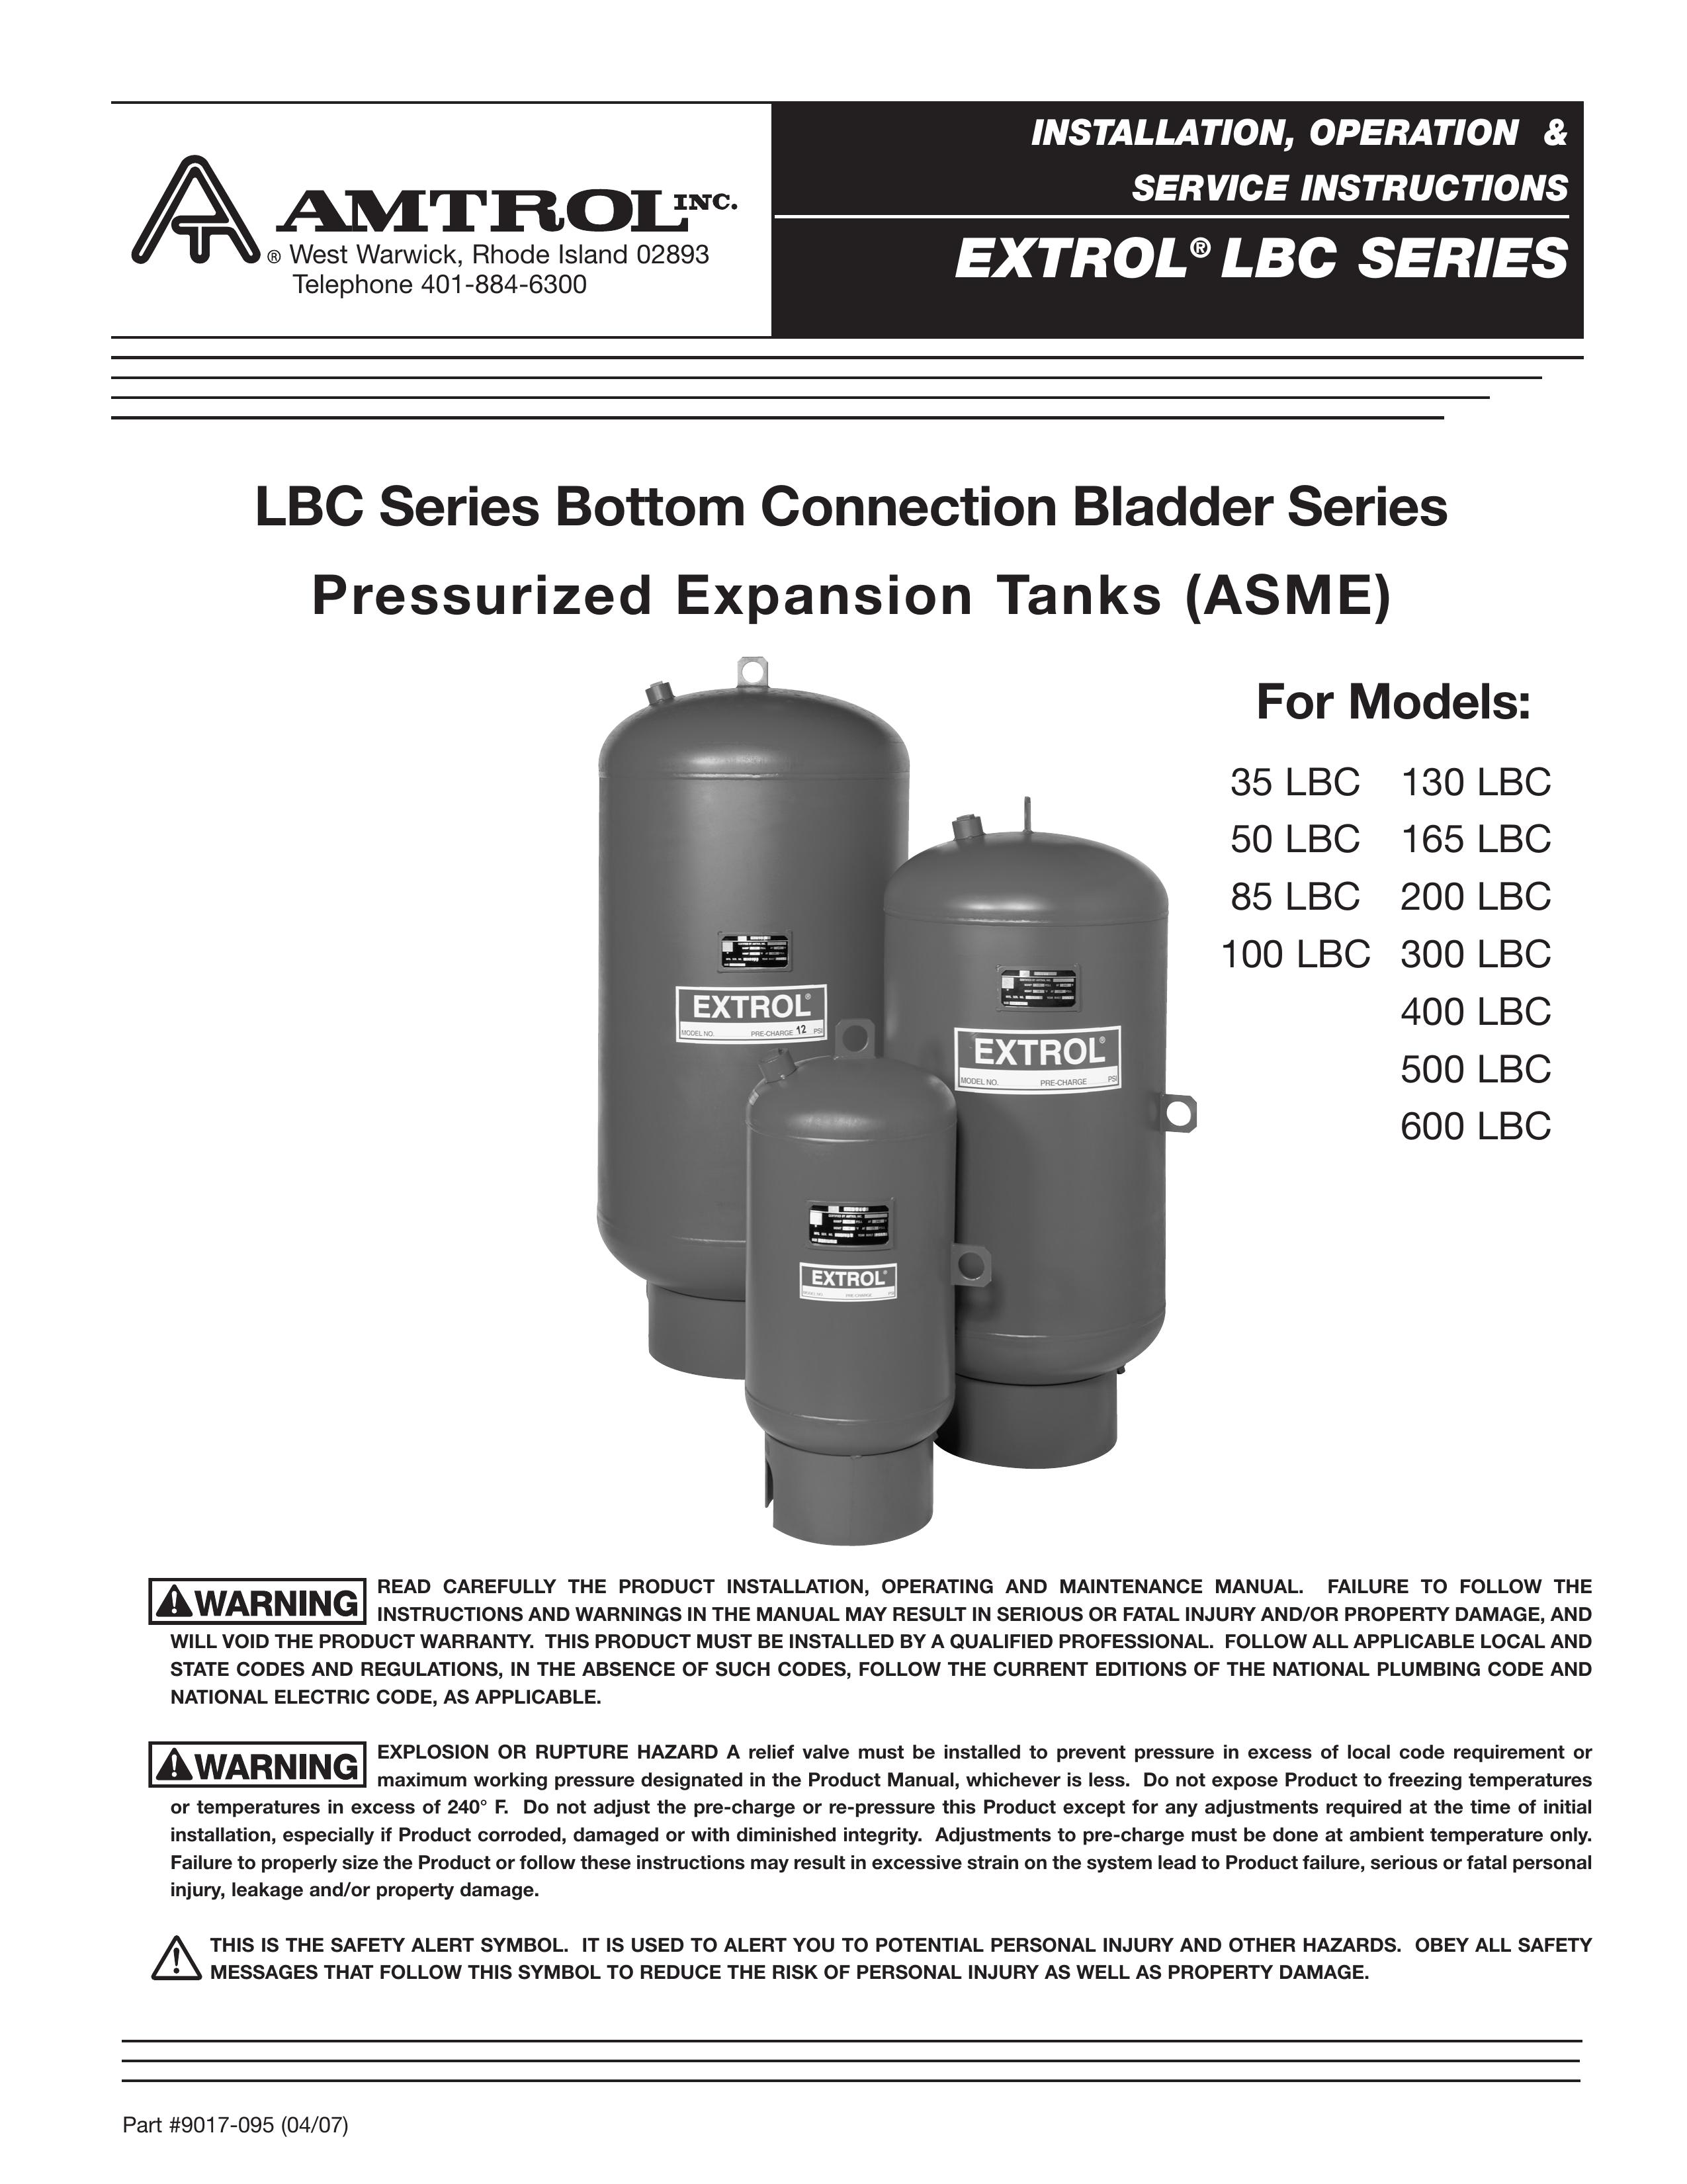 Amtrol 100 LBC Oxygen Equipment User Manual